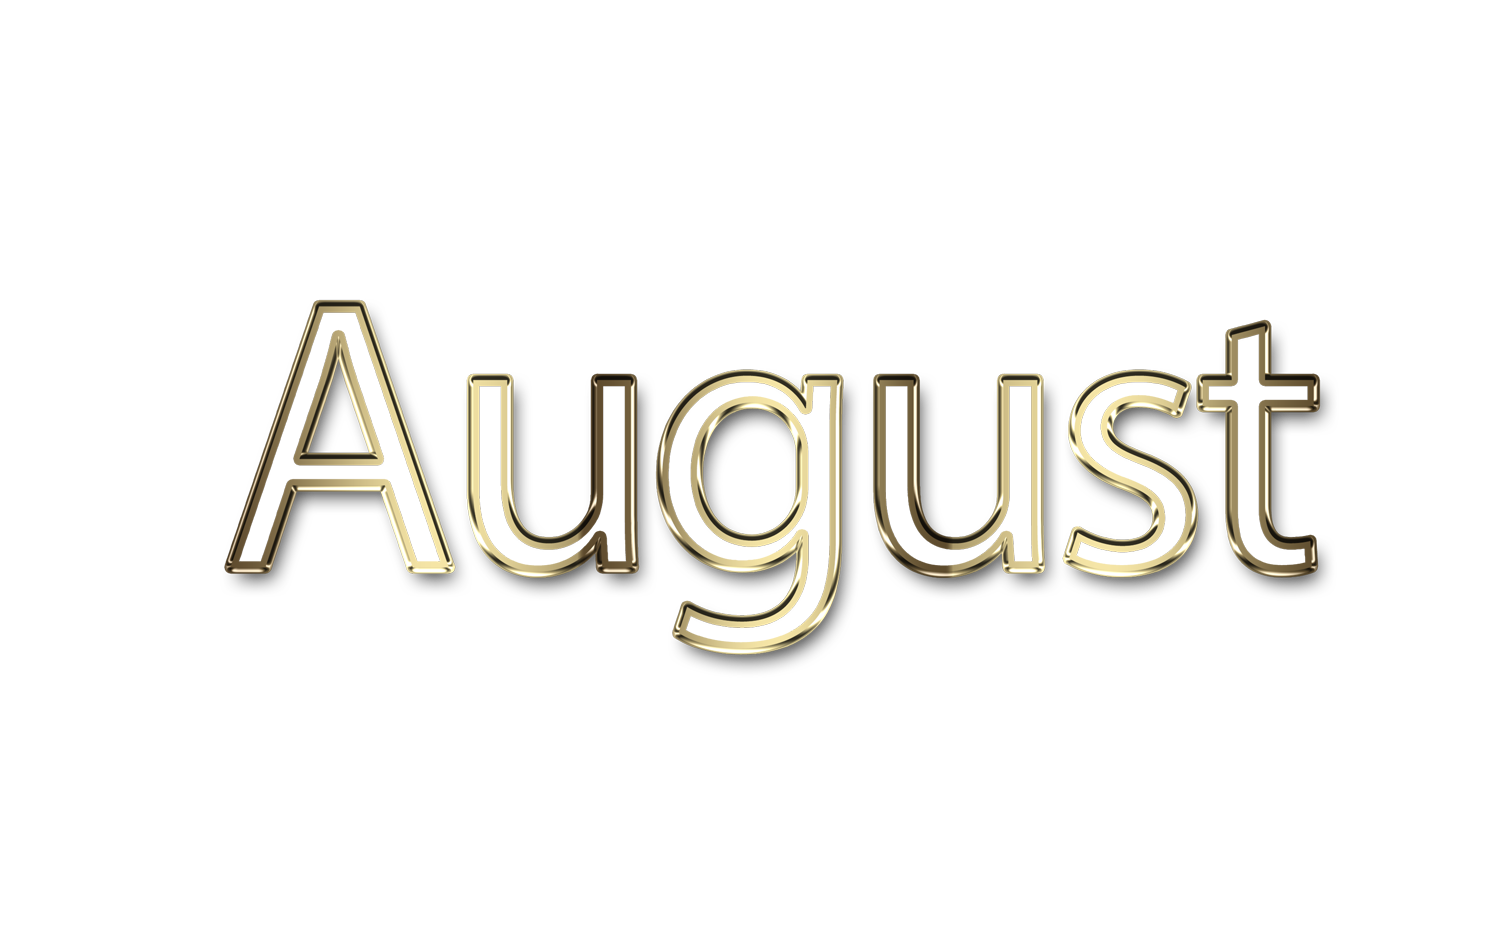 August png, word August png, August word png, August text png, August letters png, August word art typography PNG images, transparent png